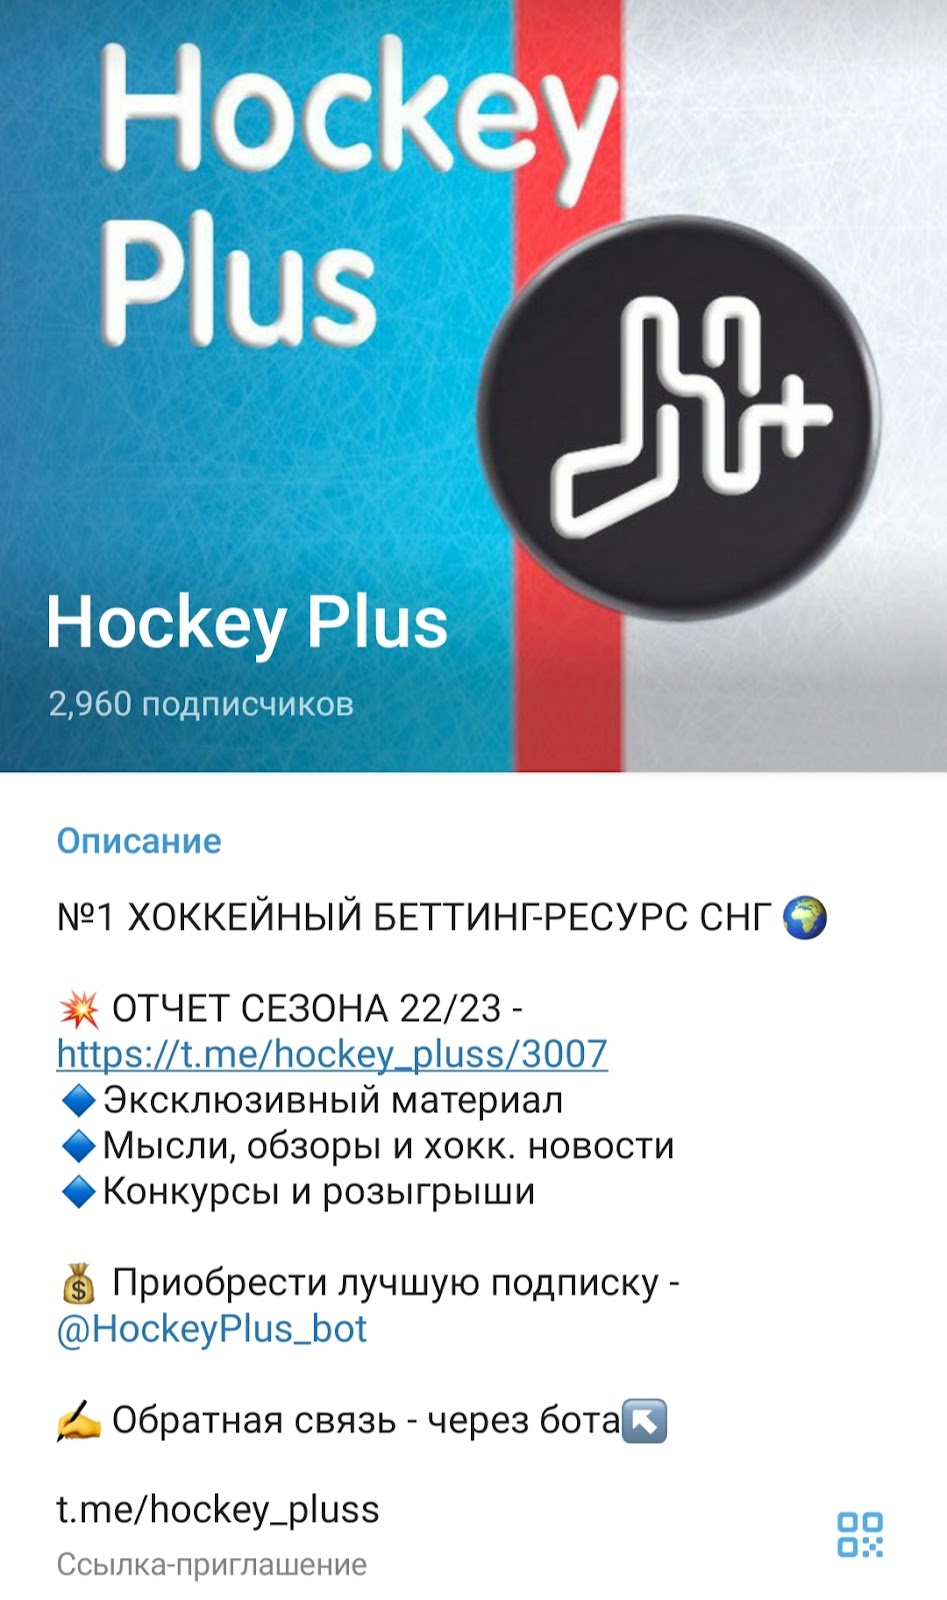 Hockey Plus